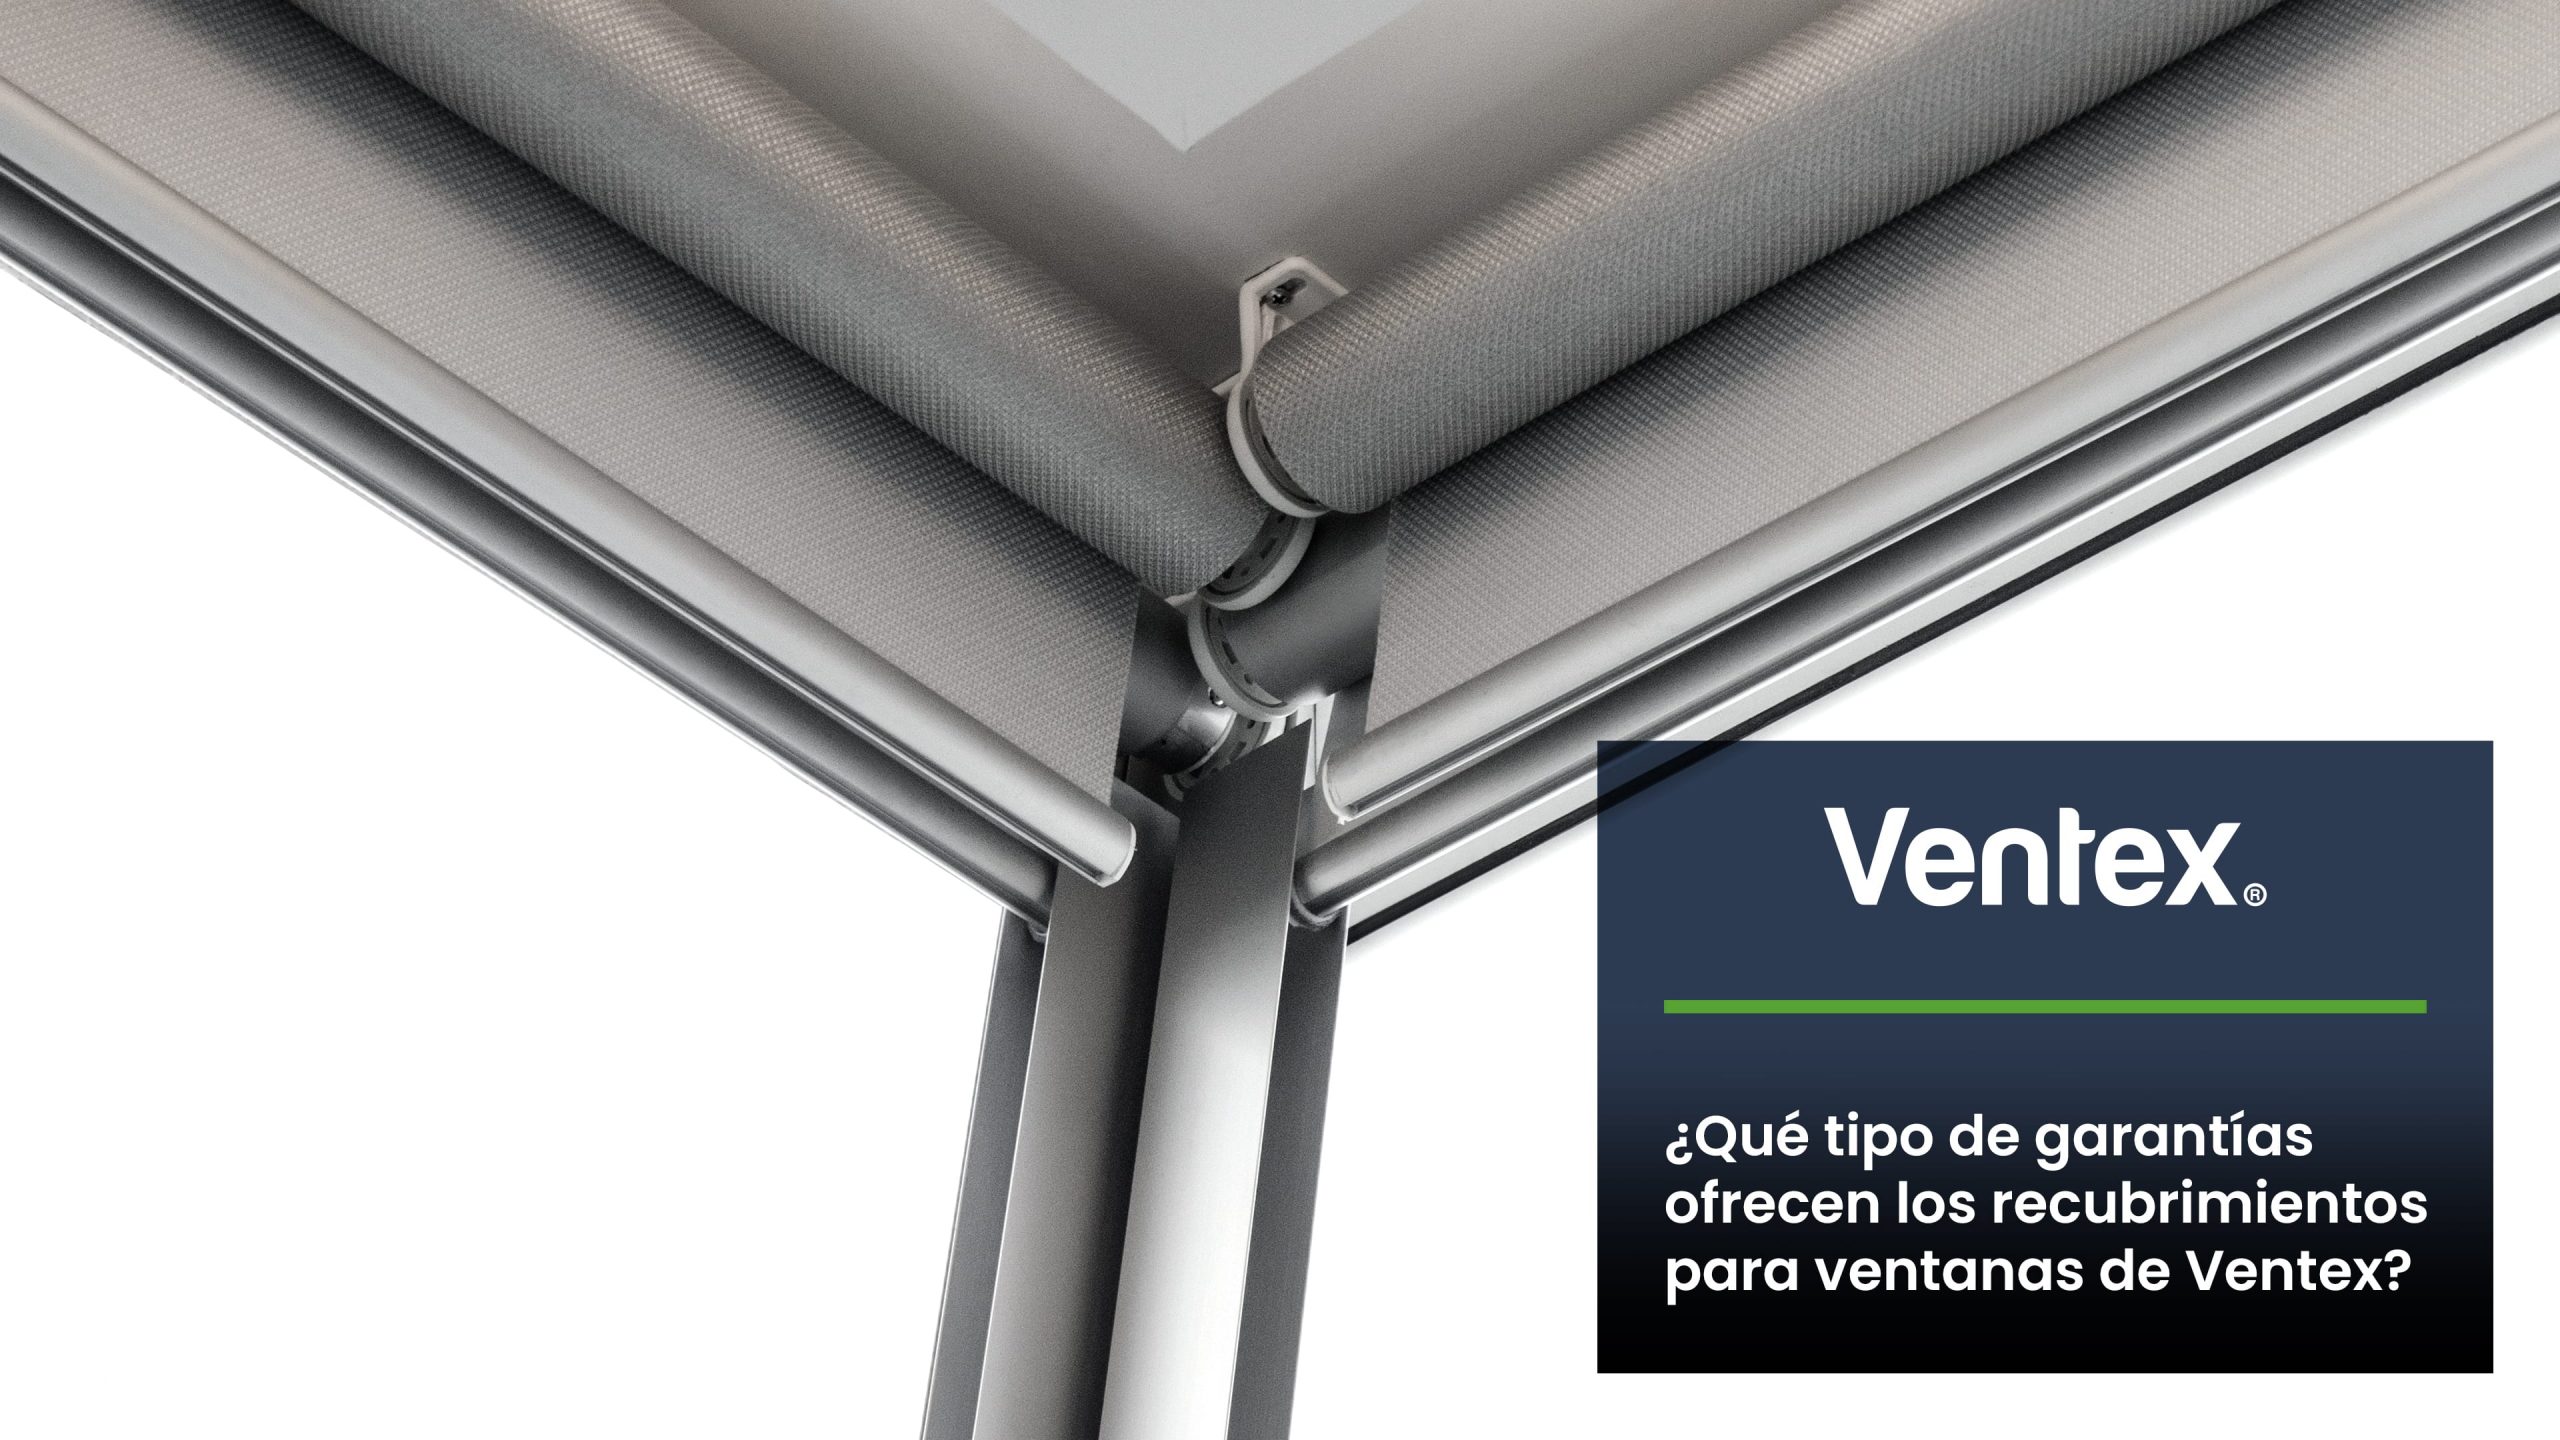 What kind of warranty do Ventex window coverings offer?